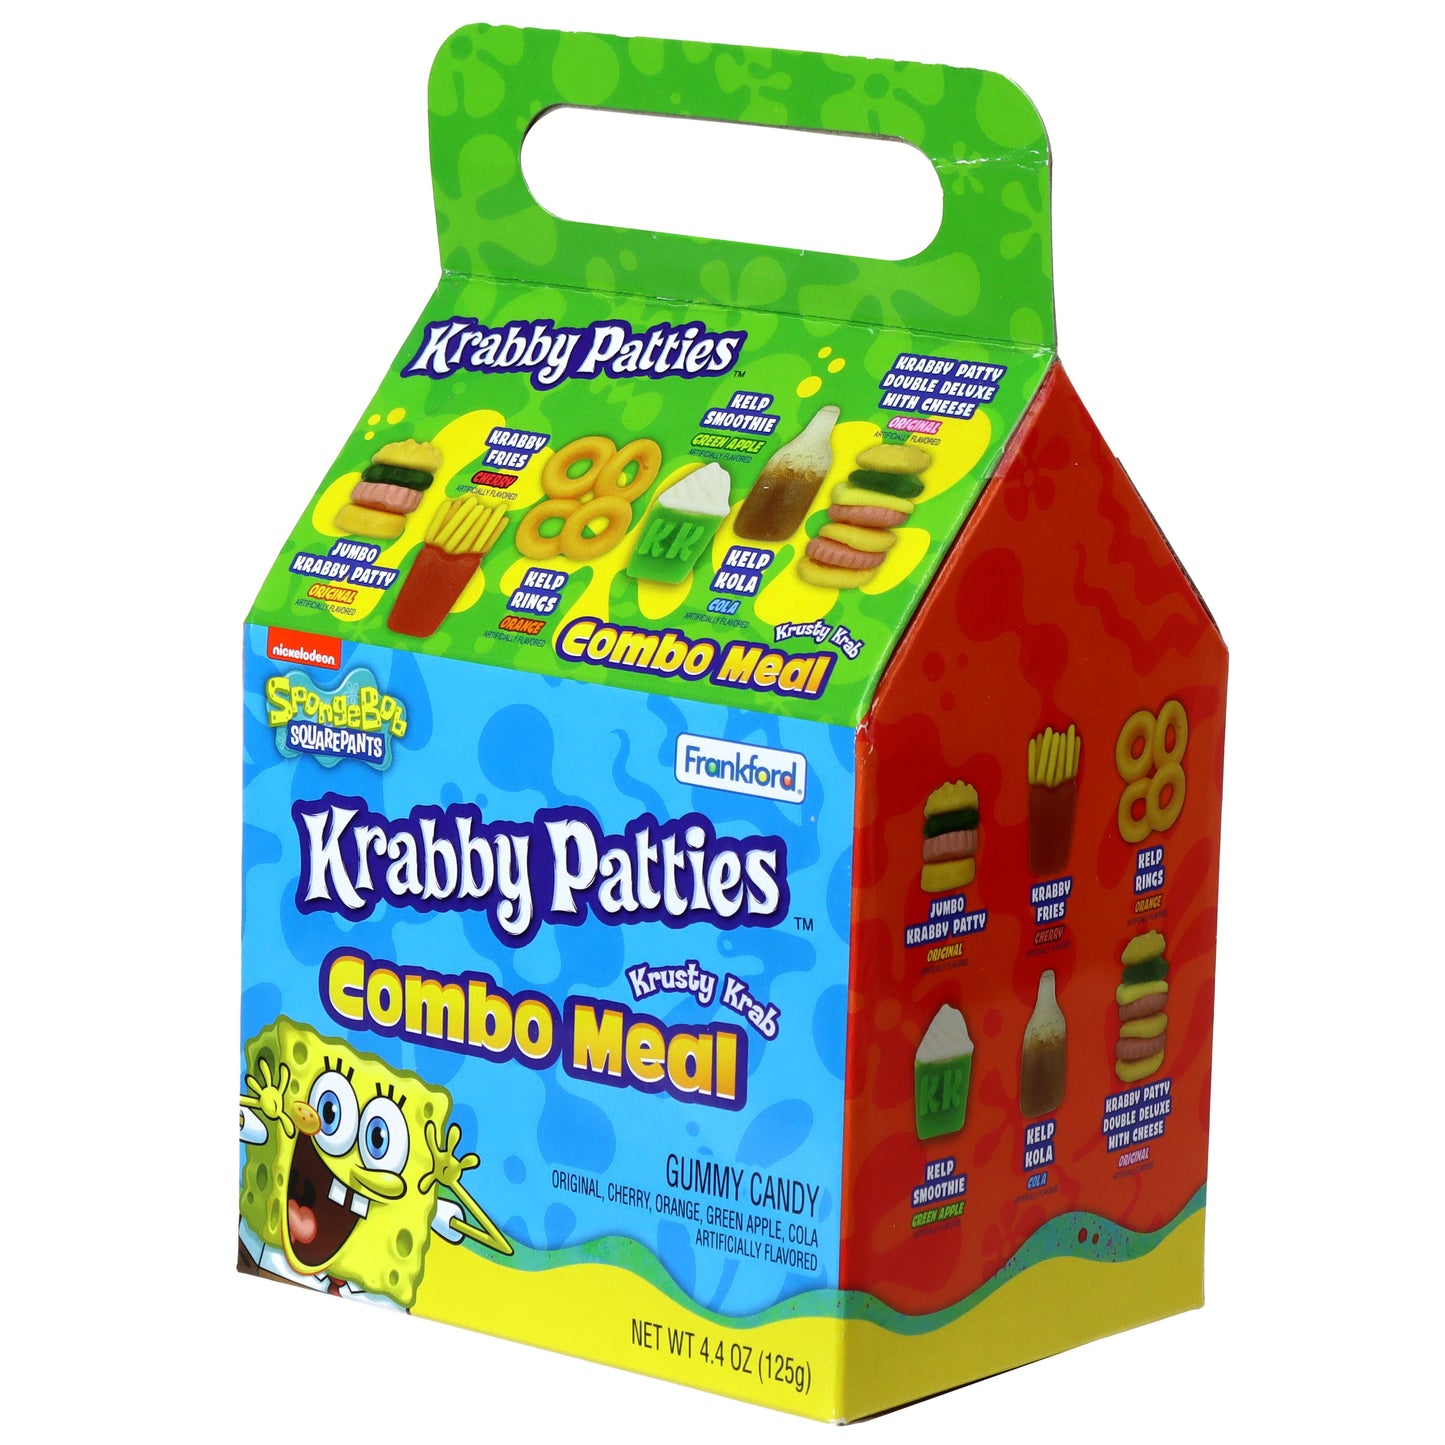 Krabby Patties Combo Meal Box